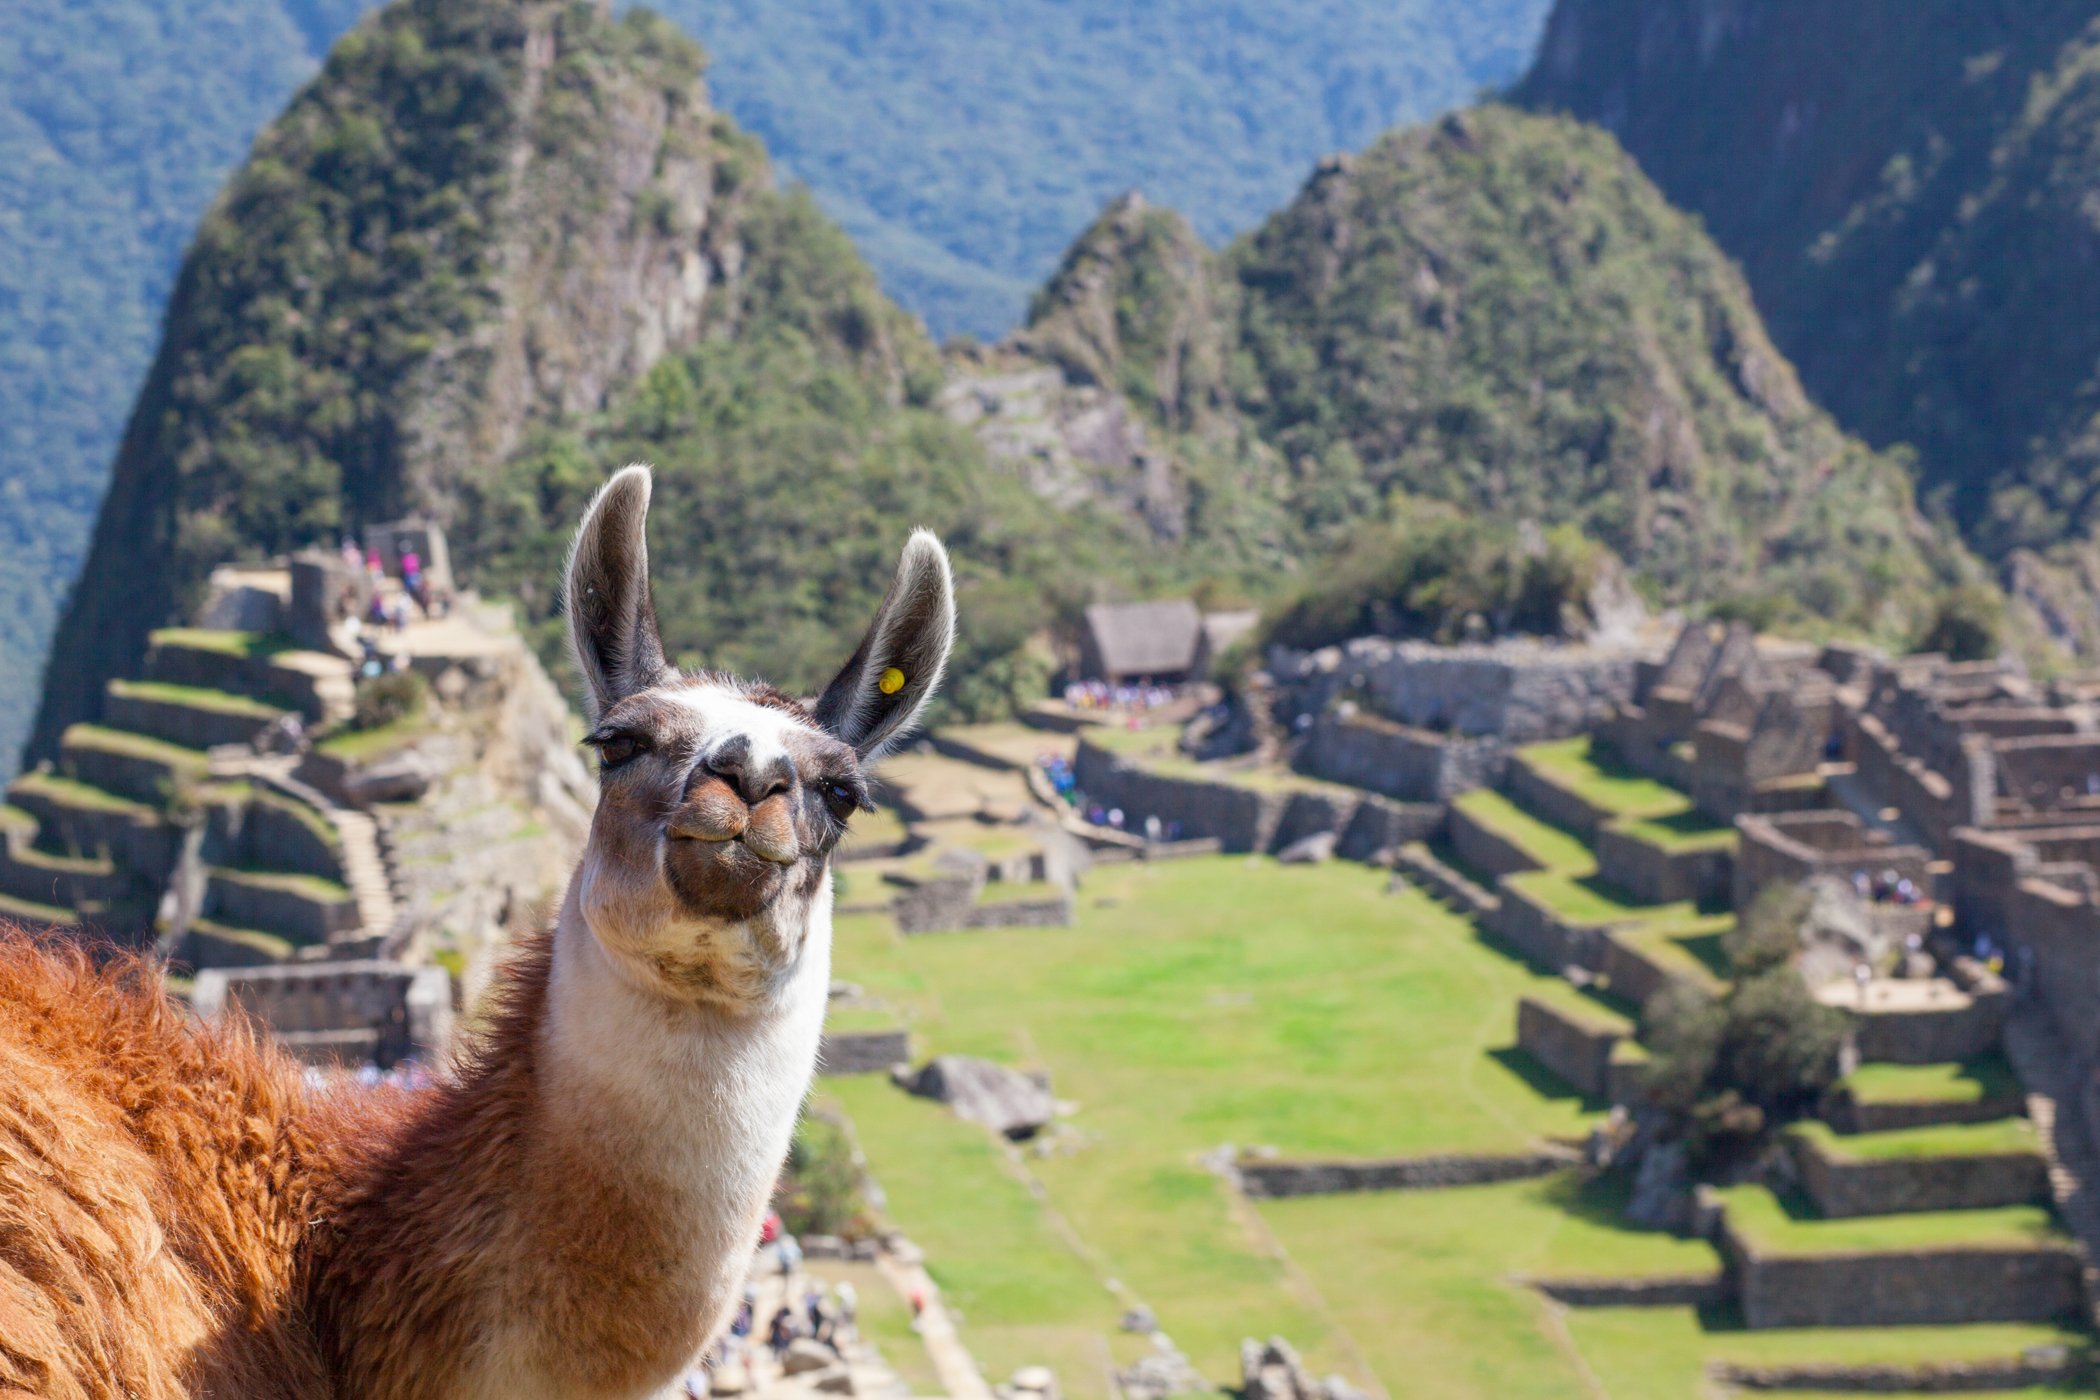 Photobombed by a Llama at Machu Picchu.